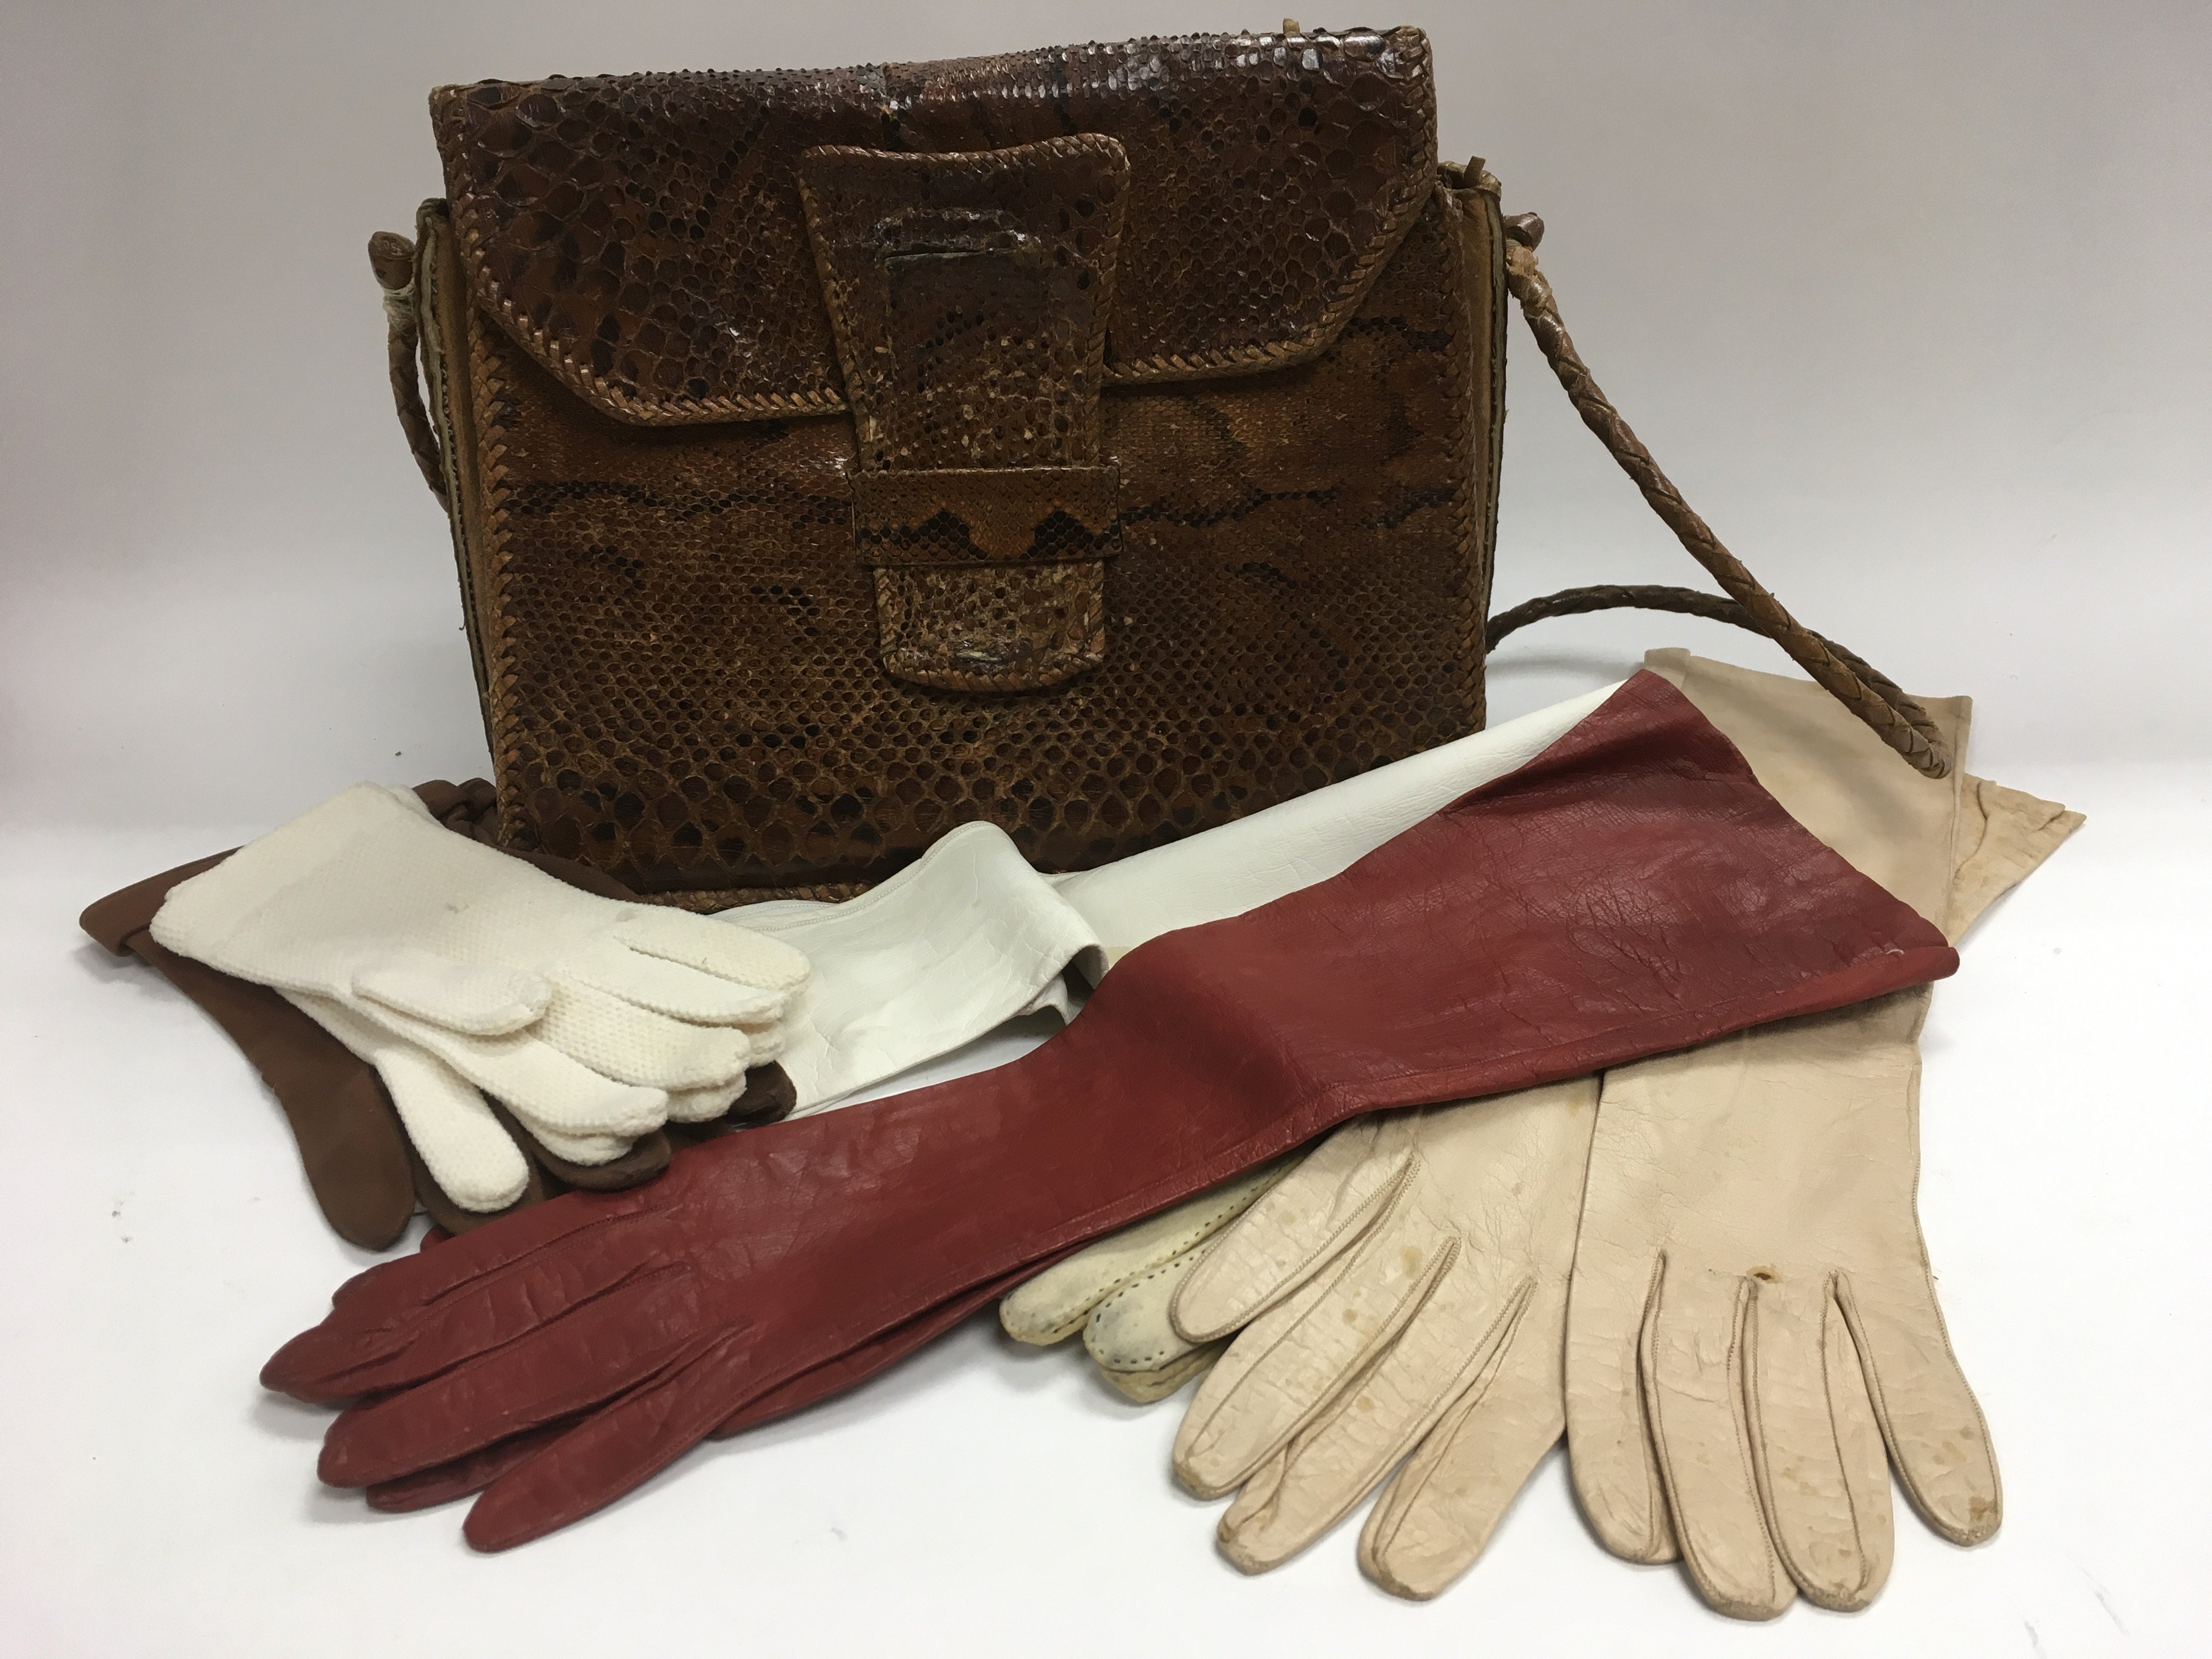 A vintage snakeskin handbag and six pairs of vinta